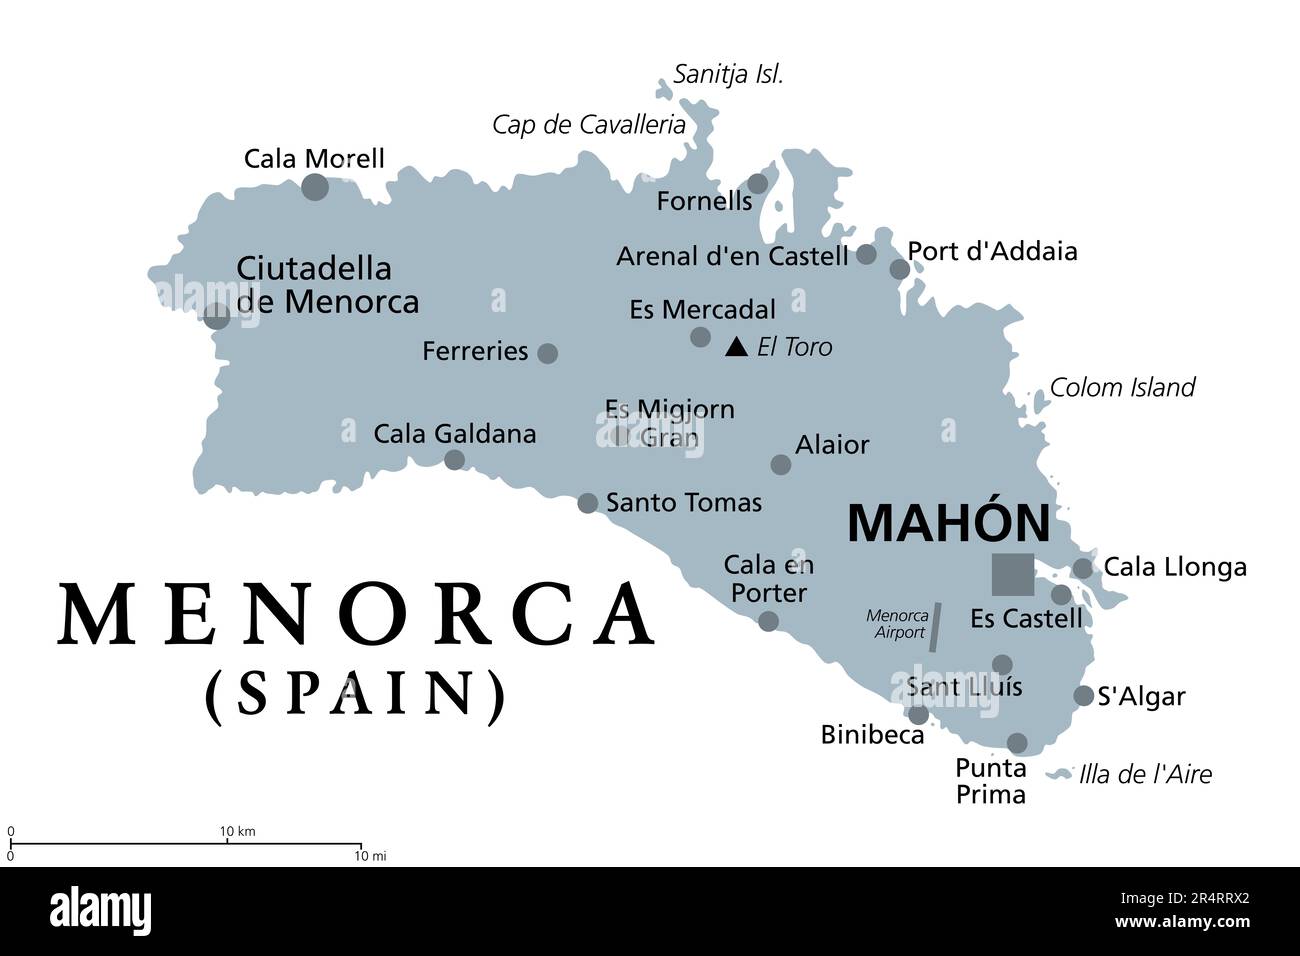 Spain Mediterranean Coast Travel Reference Map